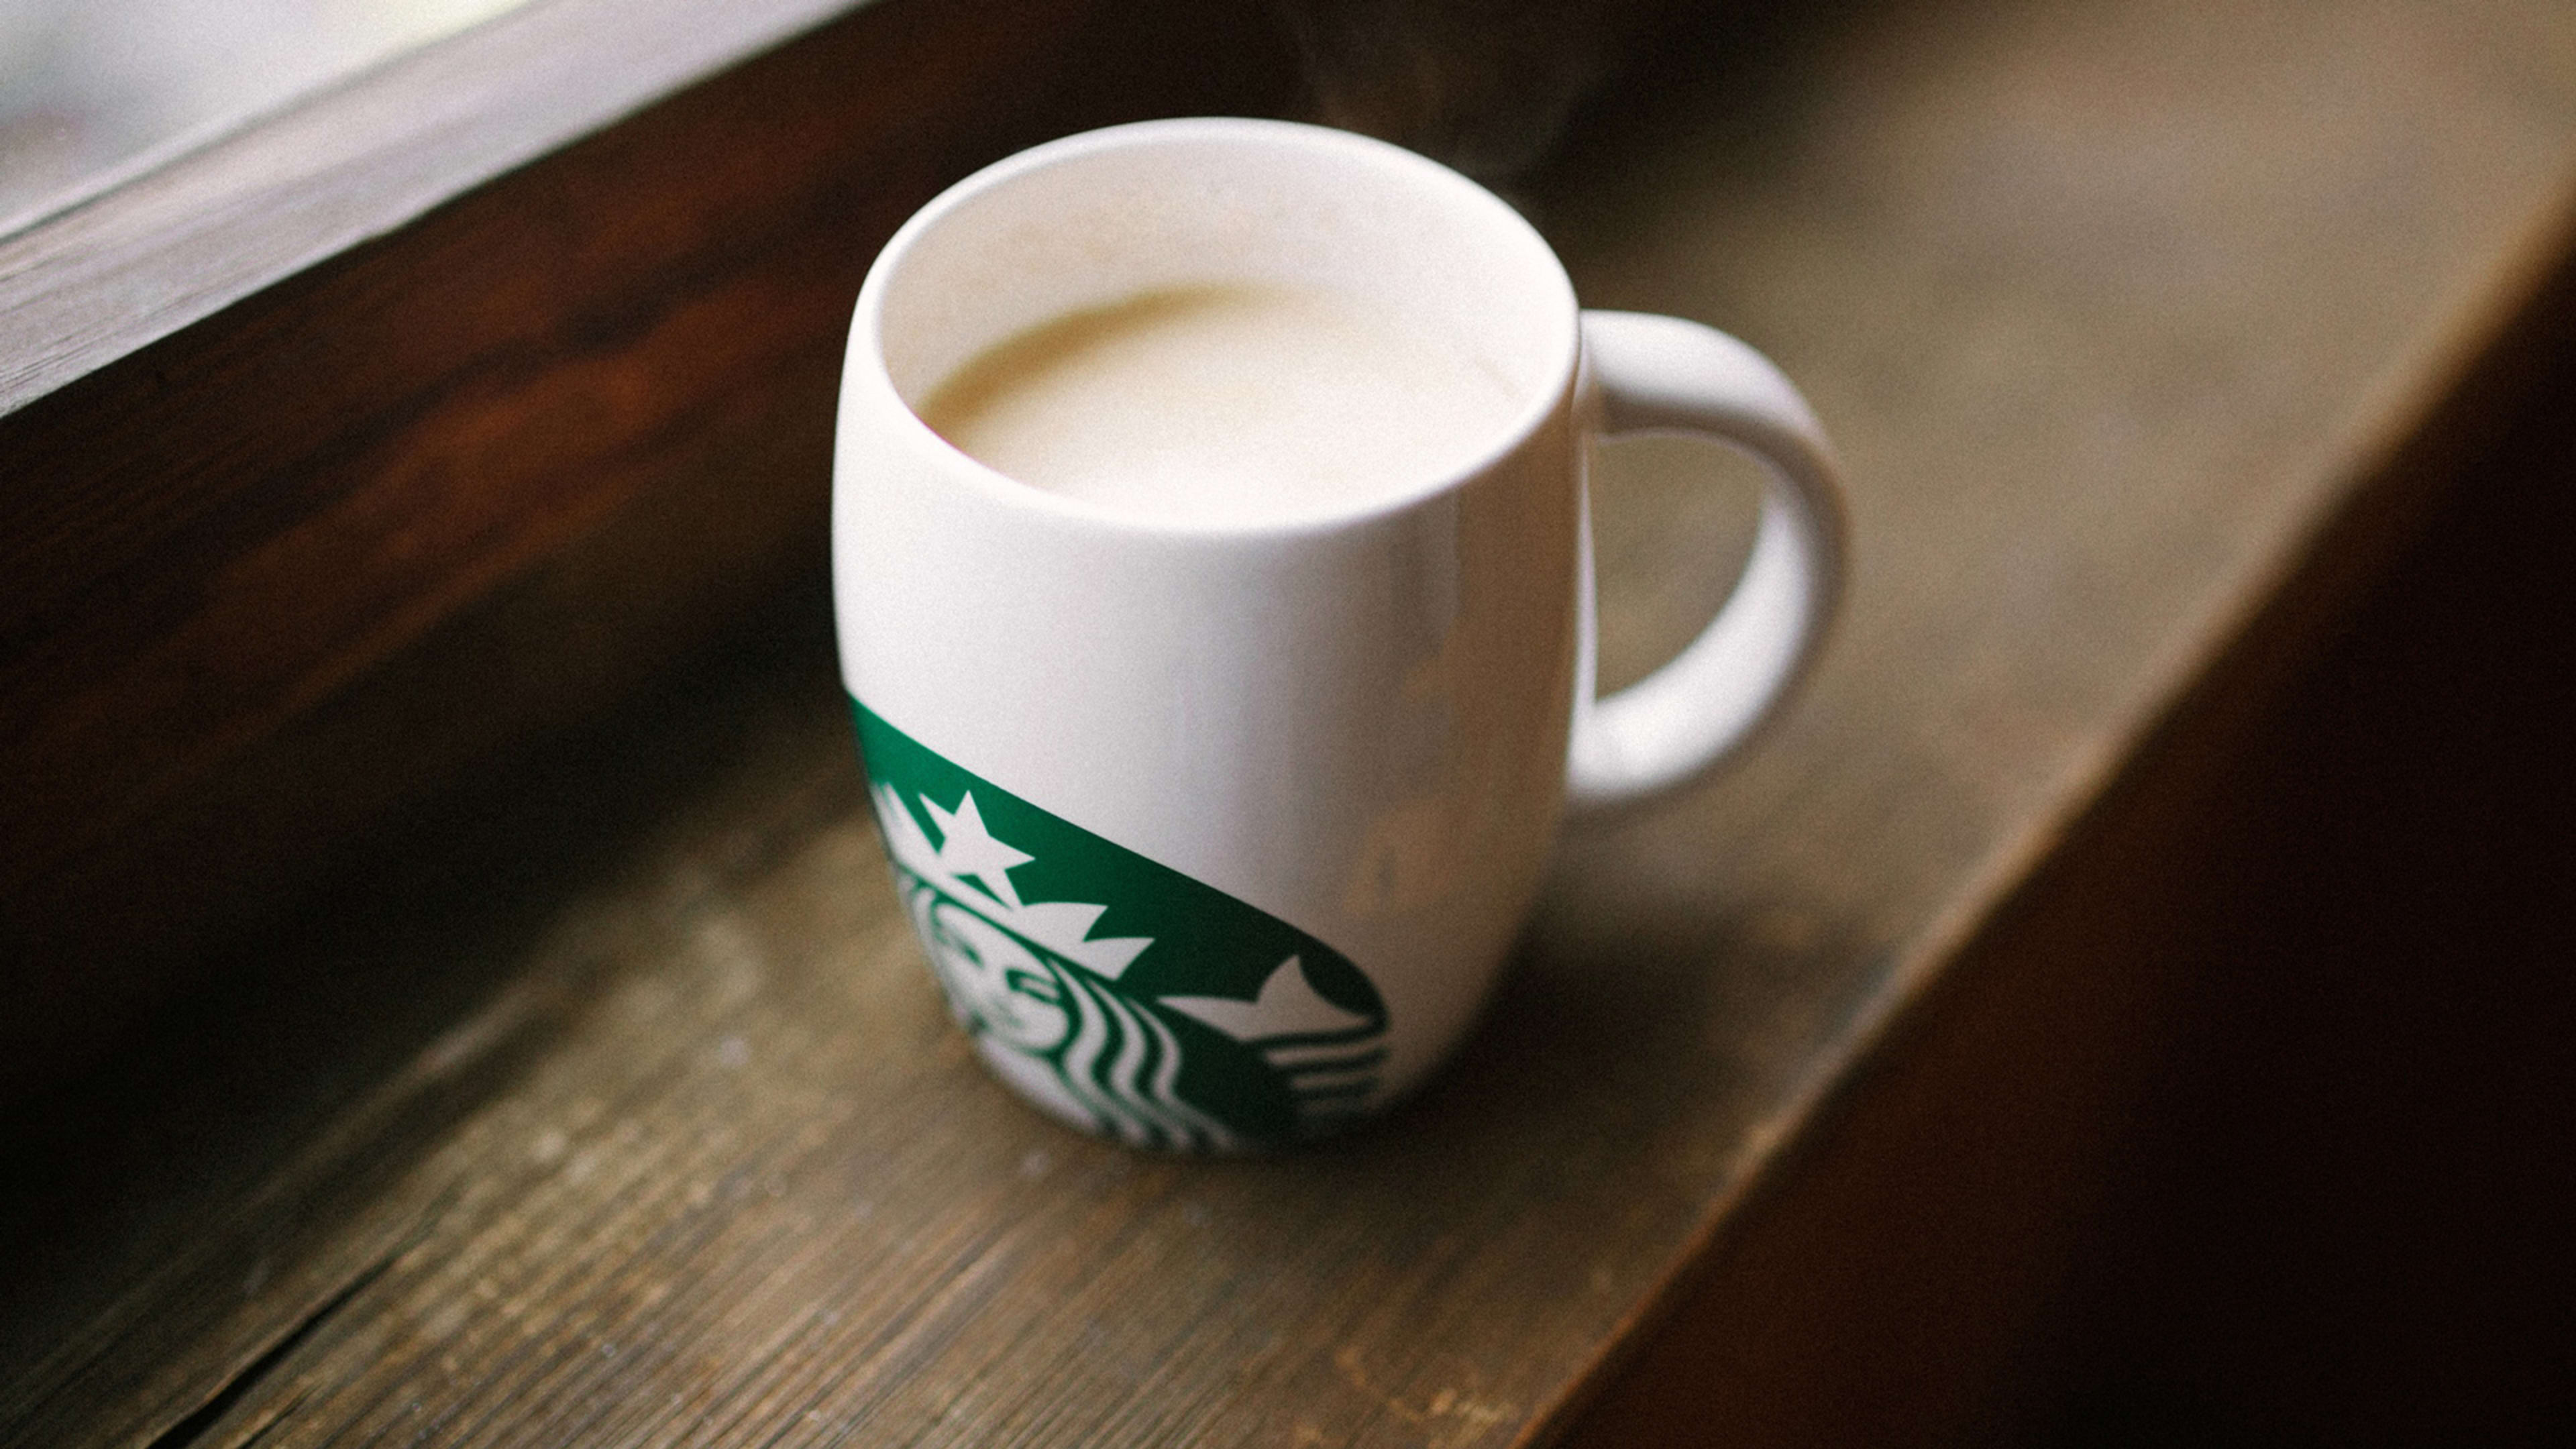 Nestlé pays $7.1 billion to market Starbucks’s coffee